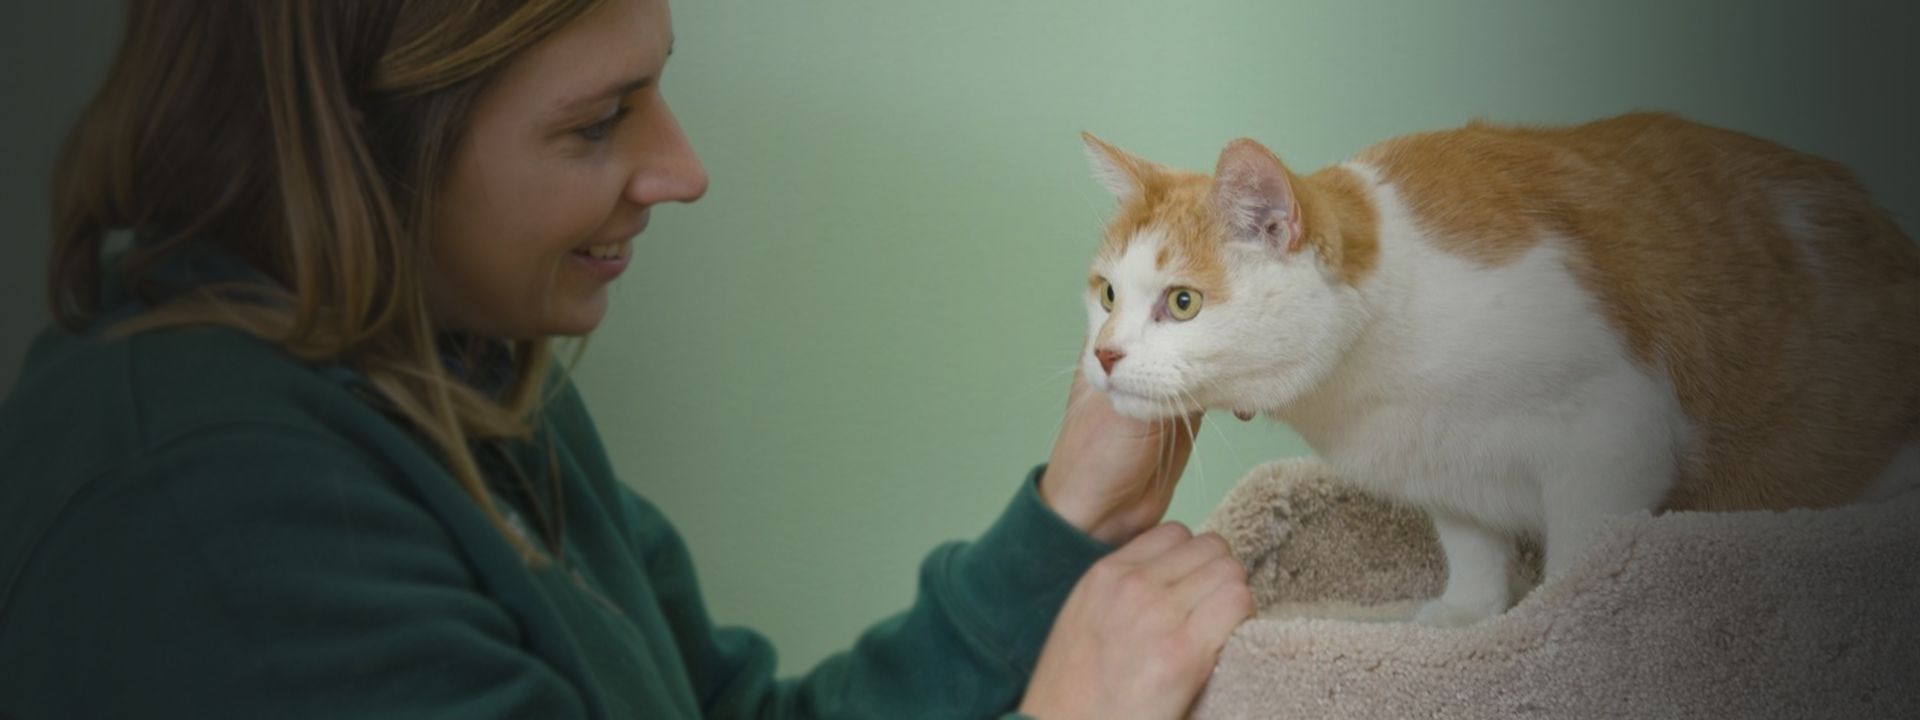 rivermist pet lodge employee petting white and orange cat